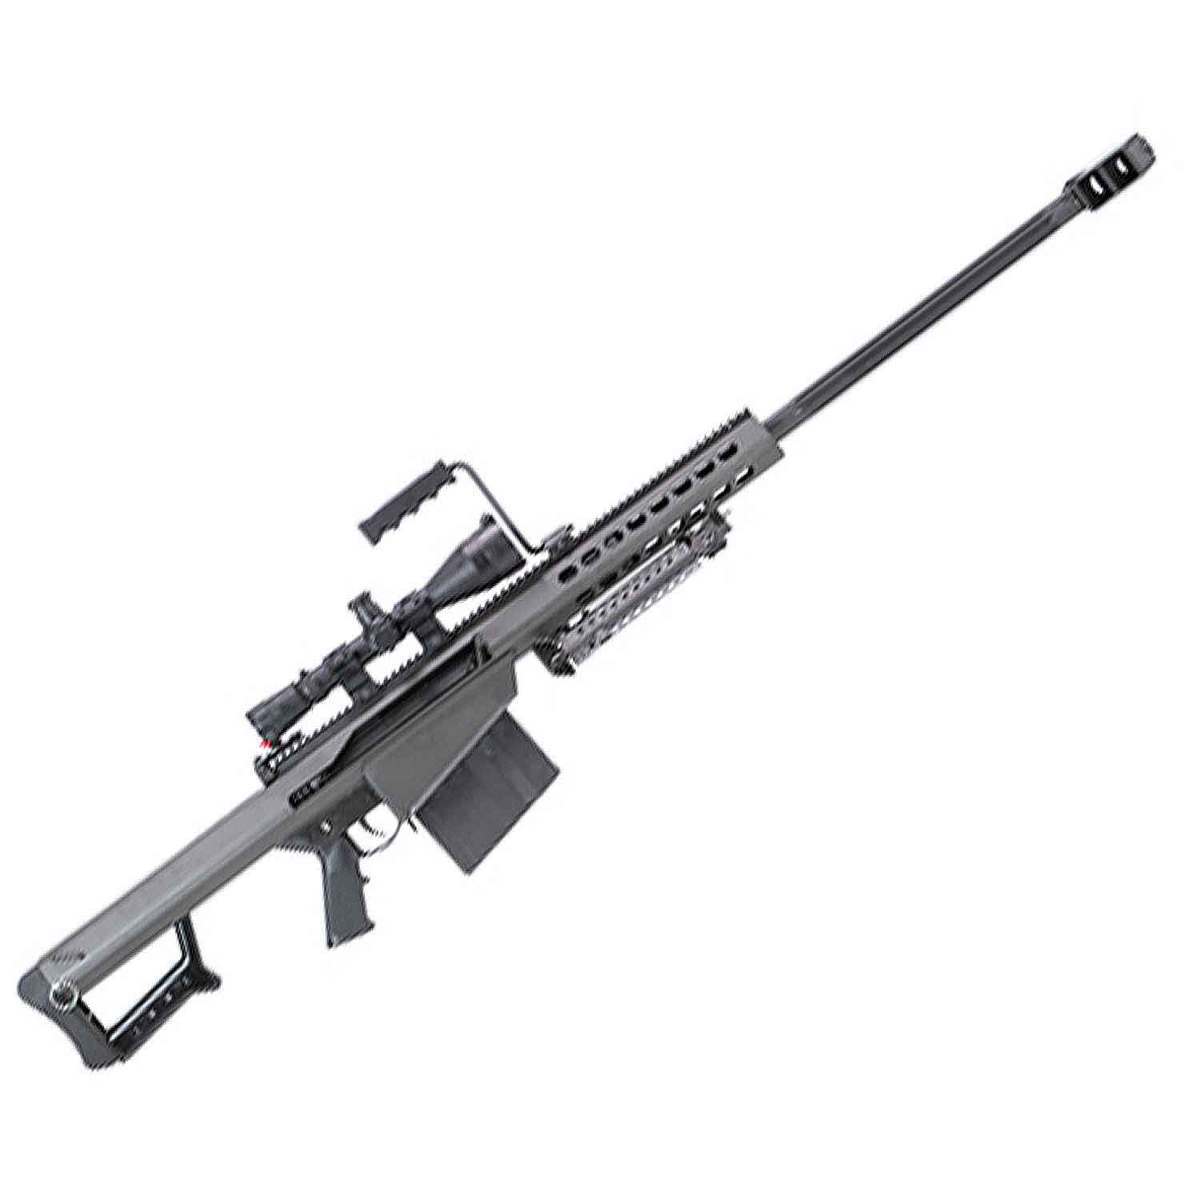 barrett-m82-a1-rifle-1500996-1.jpg